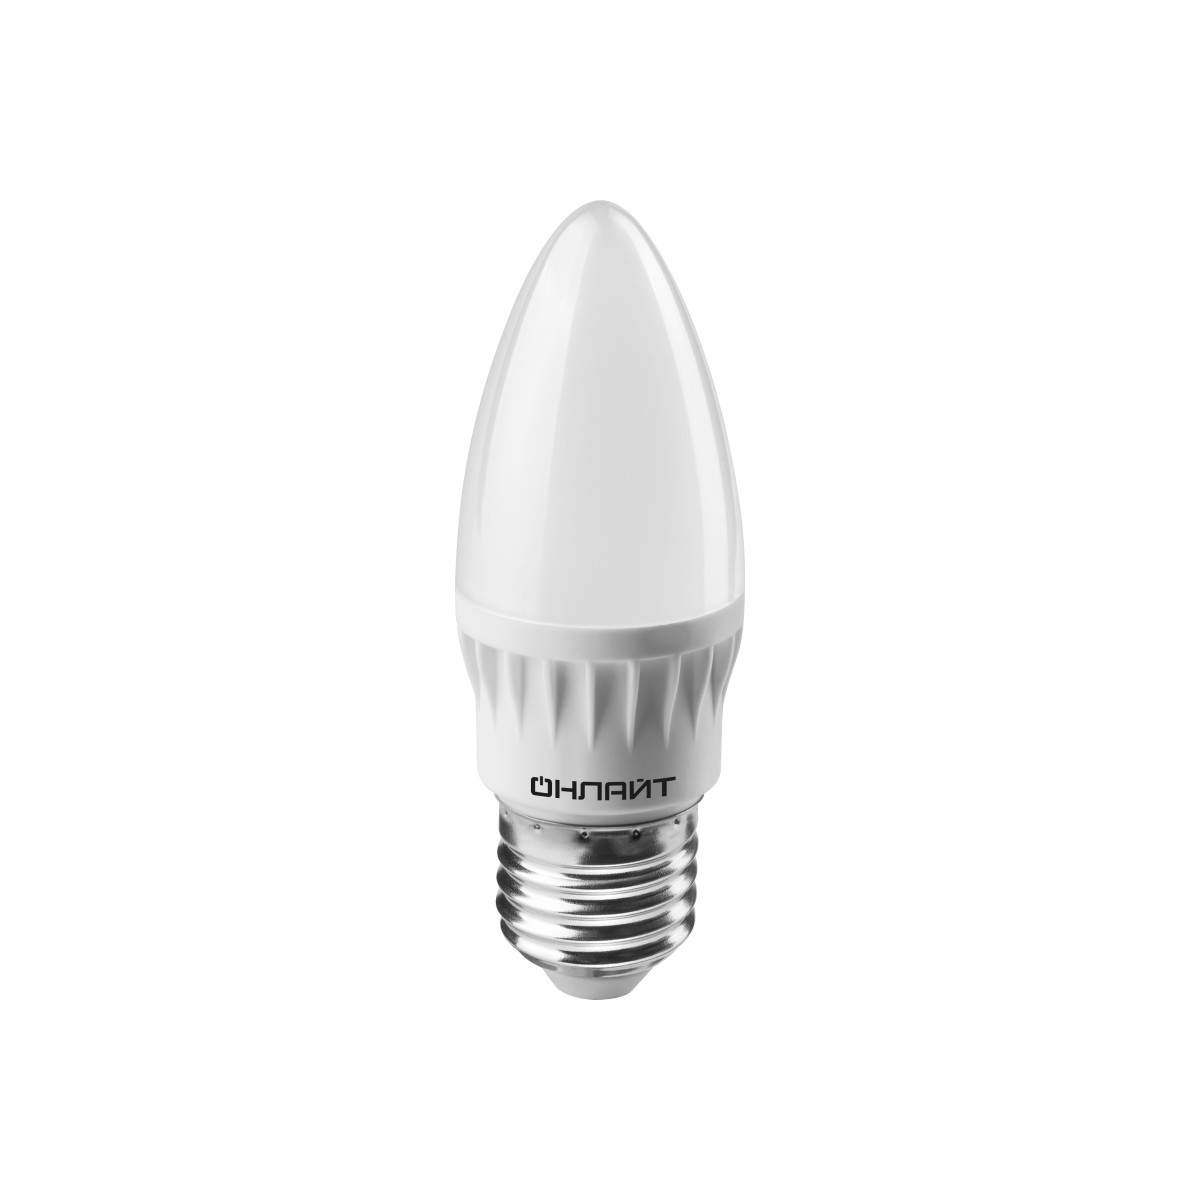 Лампа светодиодная LED Онлайт C37, свеча, 10W, 6500 K, E14, матовая, дневной свет